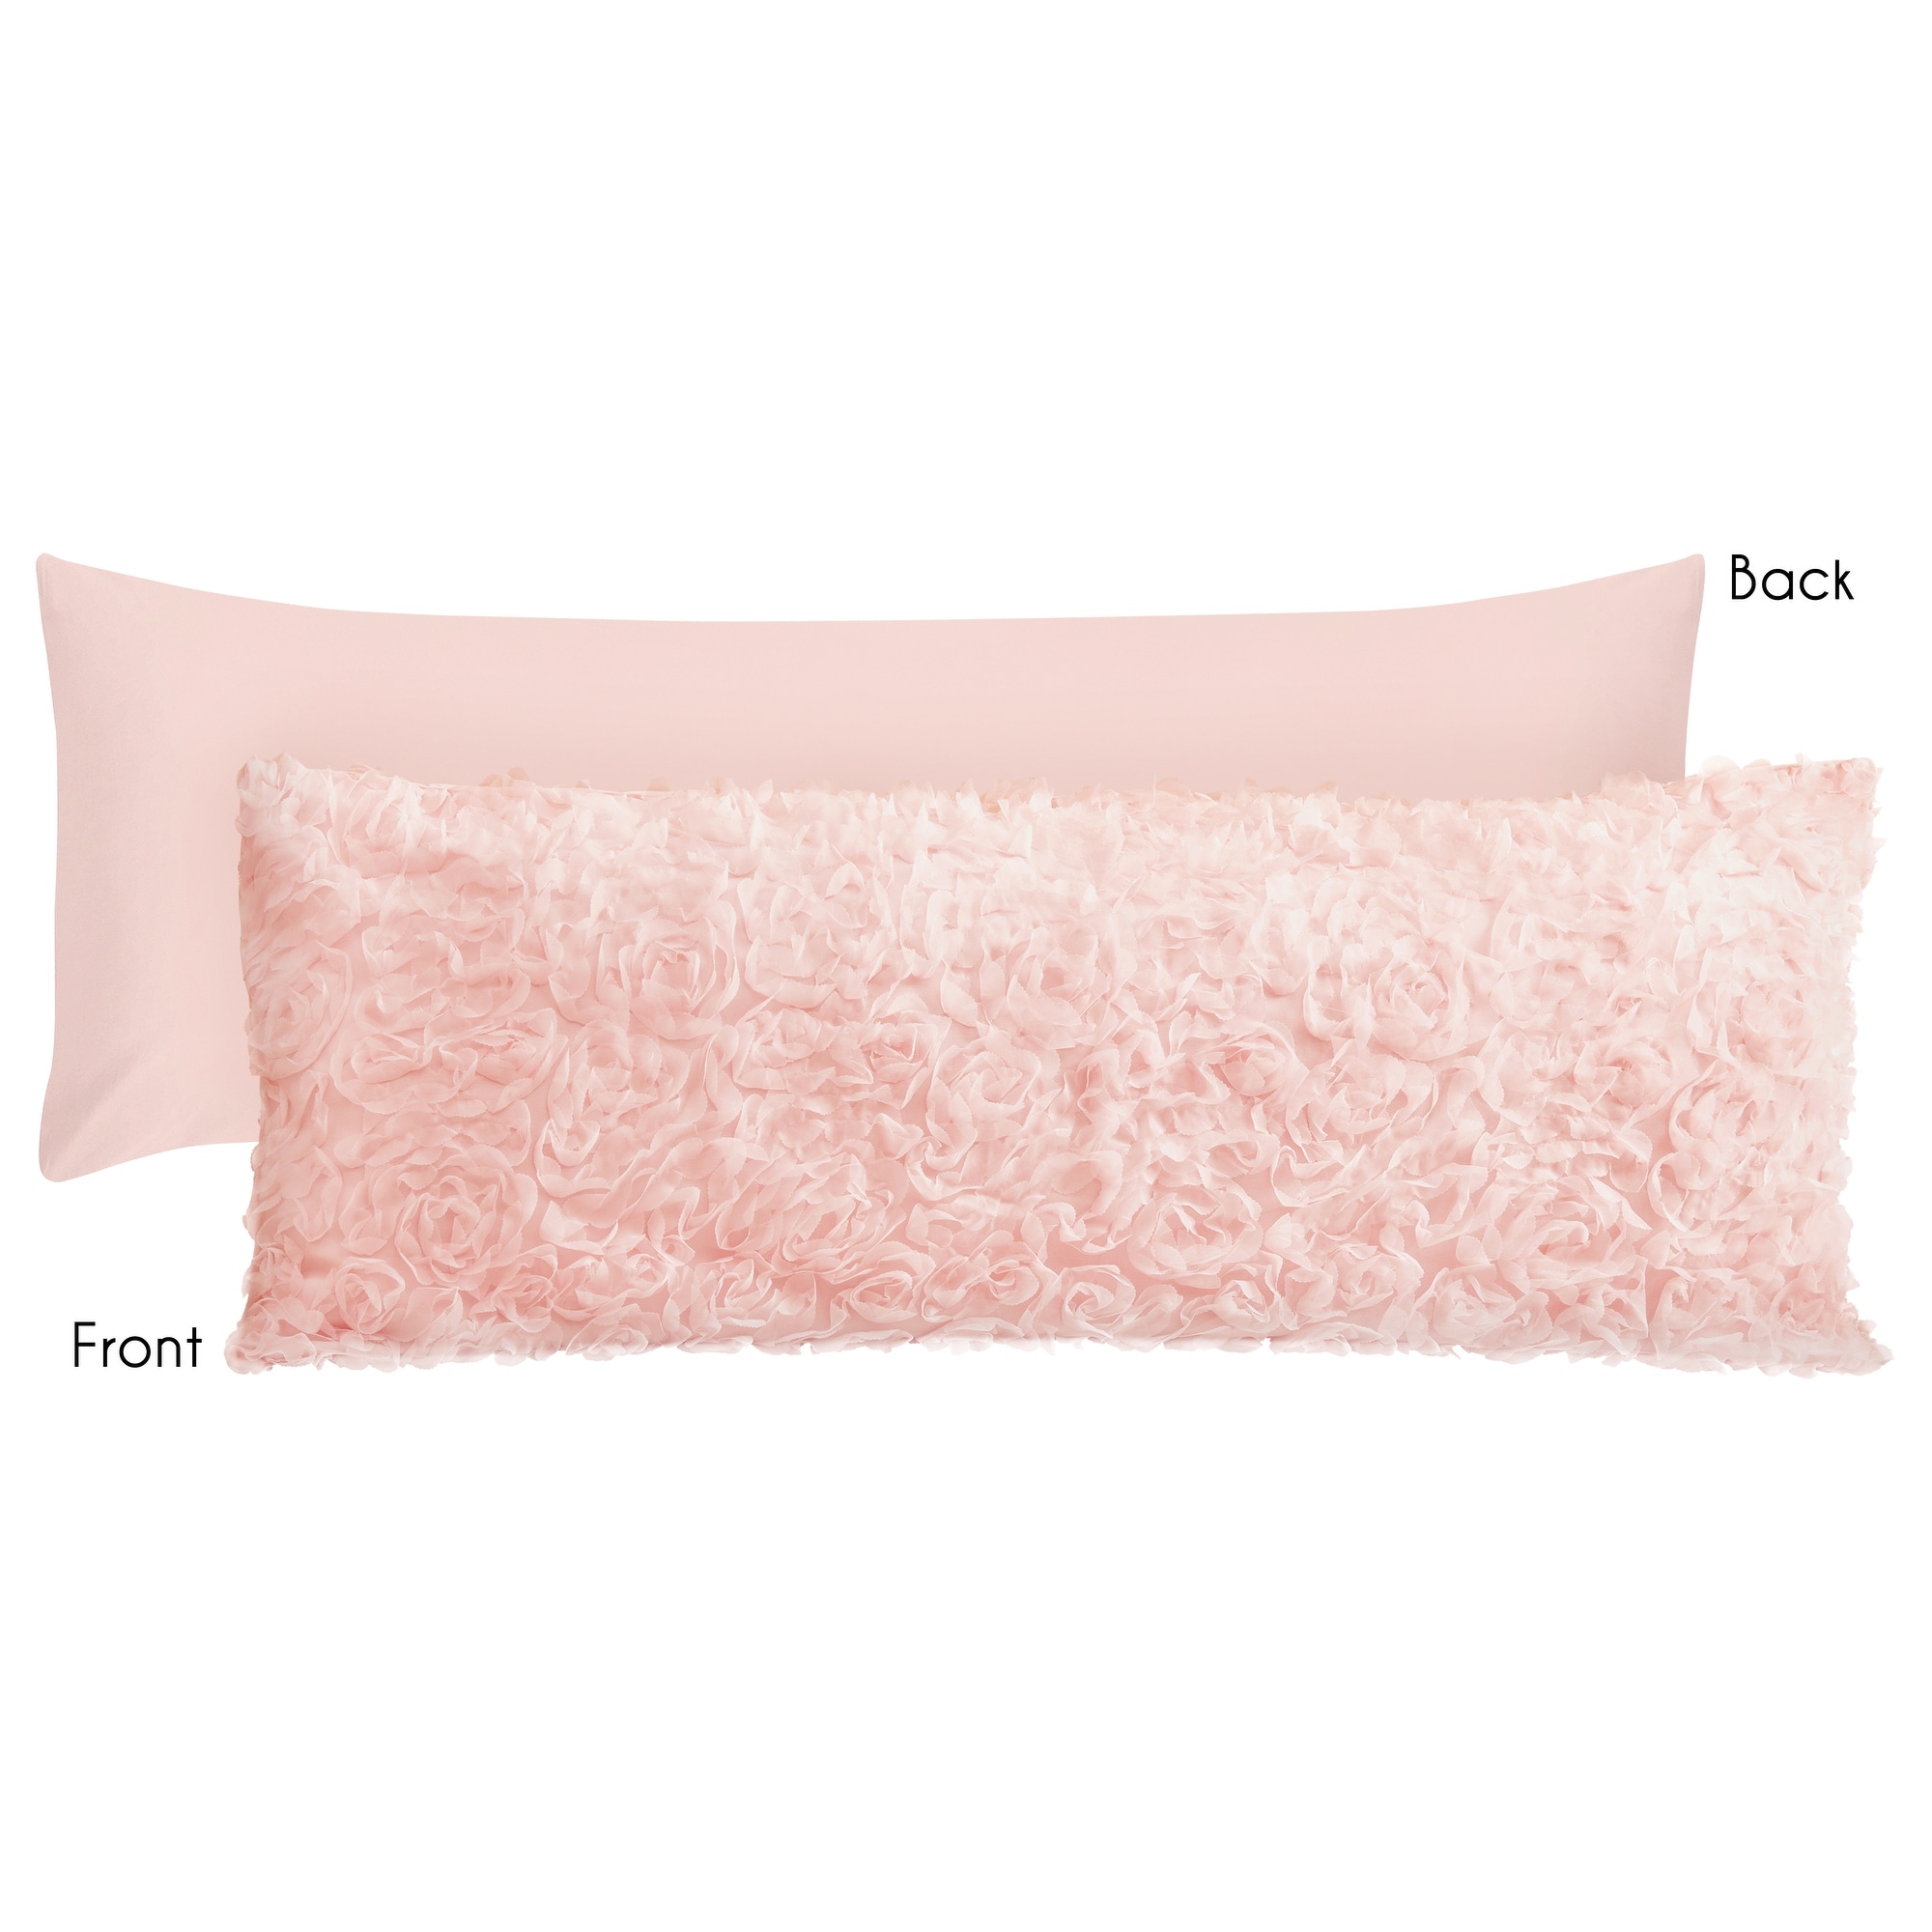 Sweet Jojo Designs Pink Floral Rose Decorative Accent Throw Pillows - Set of 2 - Solid Light Blush Flower Luxurious Elegant